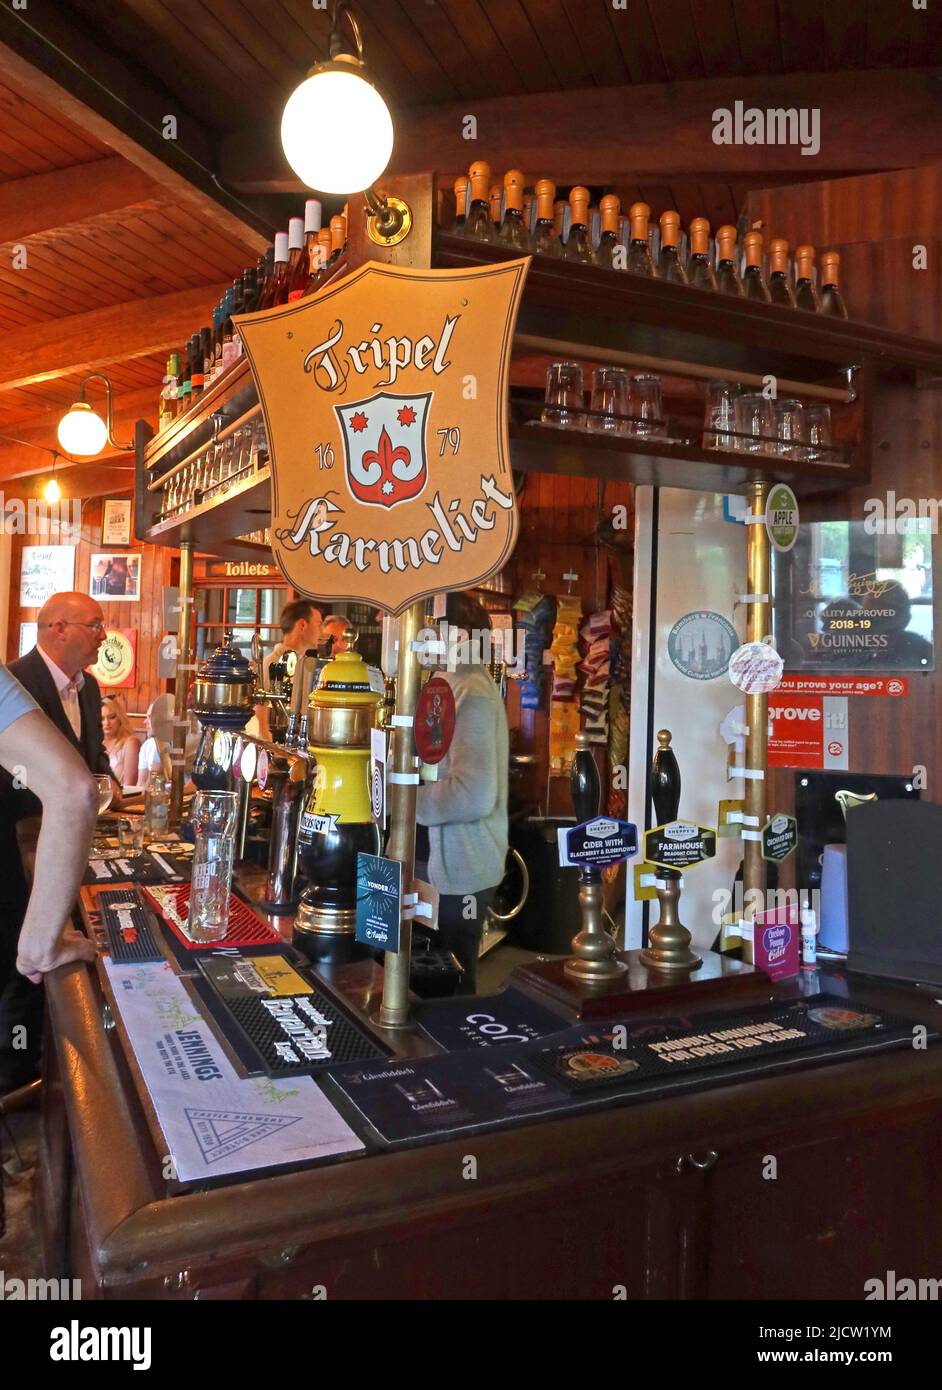 Bar im Liverpool Ship and Mitre Real Ale Pub, Bar mit maritimem Thema und belgisches Tripel Karmeliet Bier Logo, L2 Stockfoto